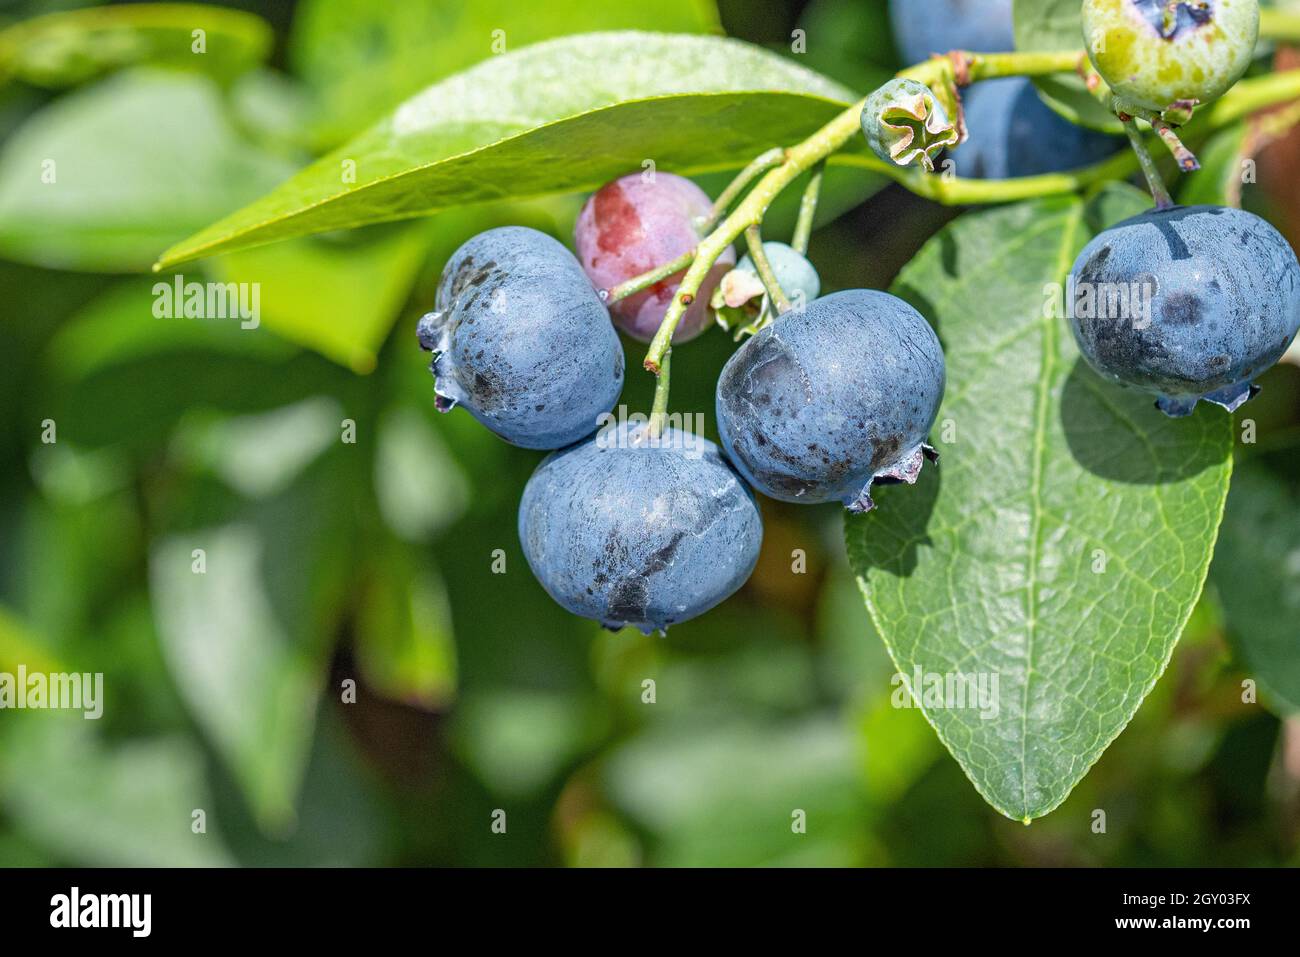 Arándano alto, arándano alto, arándano pantano (Vaccinium corymbosum 'Bluetta', Vaccinium corymbosum Bluetta), frutas en una rama, cultivar Foto de stock